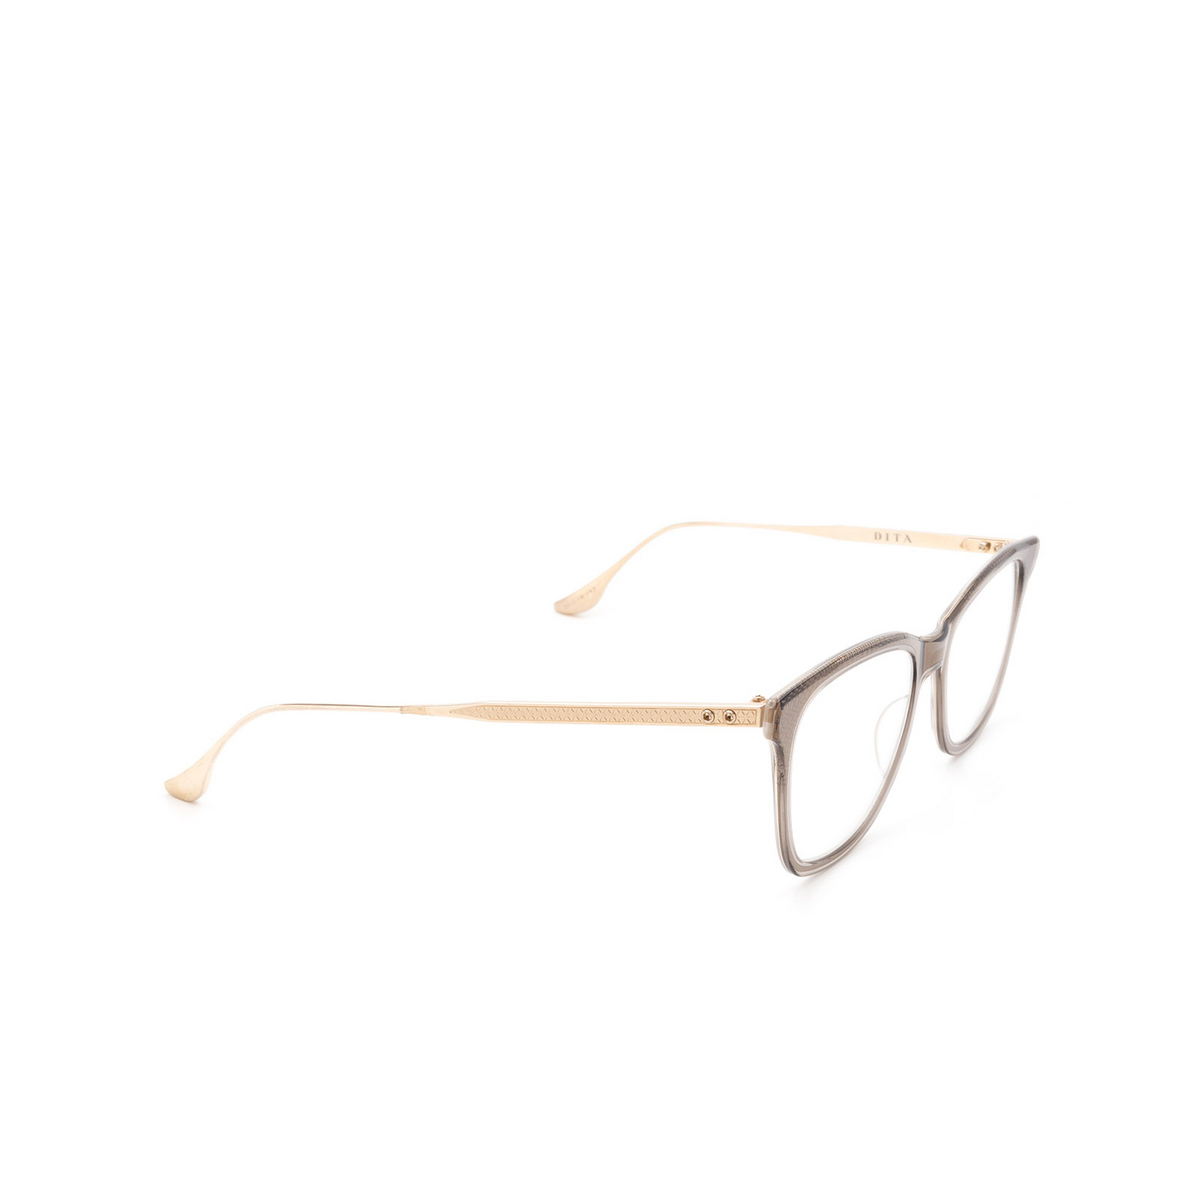 Dita DTX505 Eyeglasses GRY-GLD - 2/4